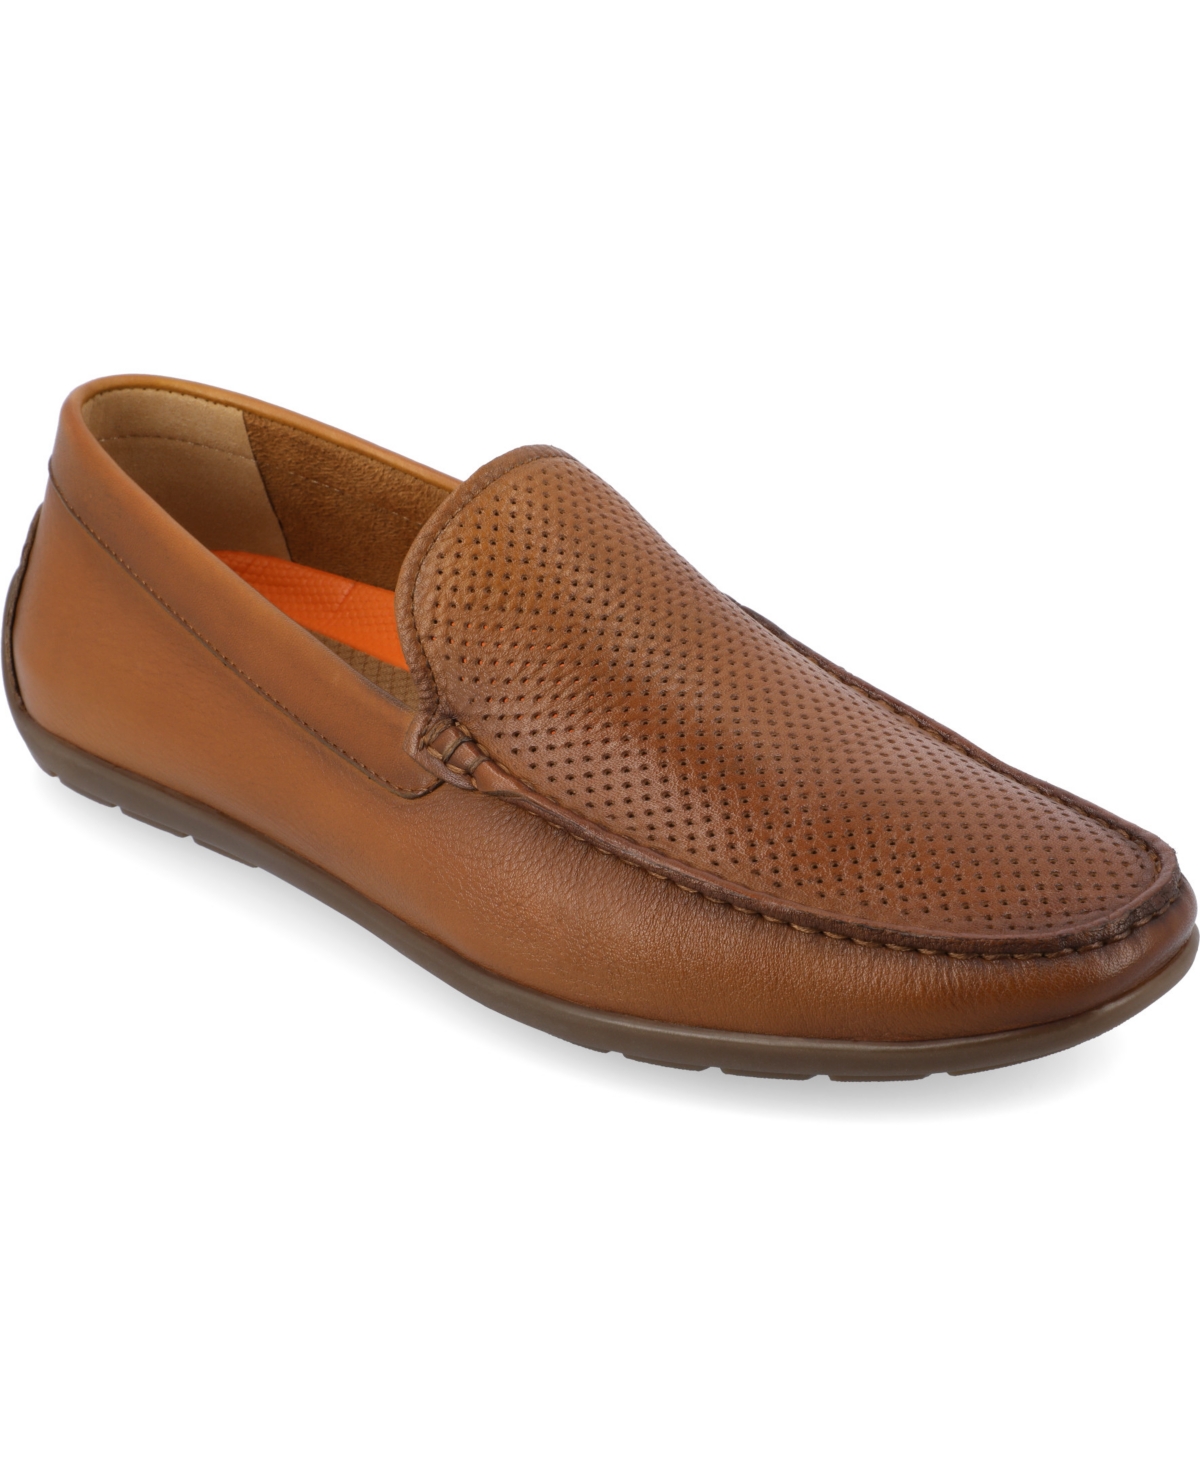 Men's Jaden Tru Comfort Foam Moc Toe Slip-On Driving Loafers - Mahogany